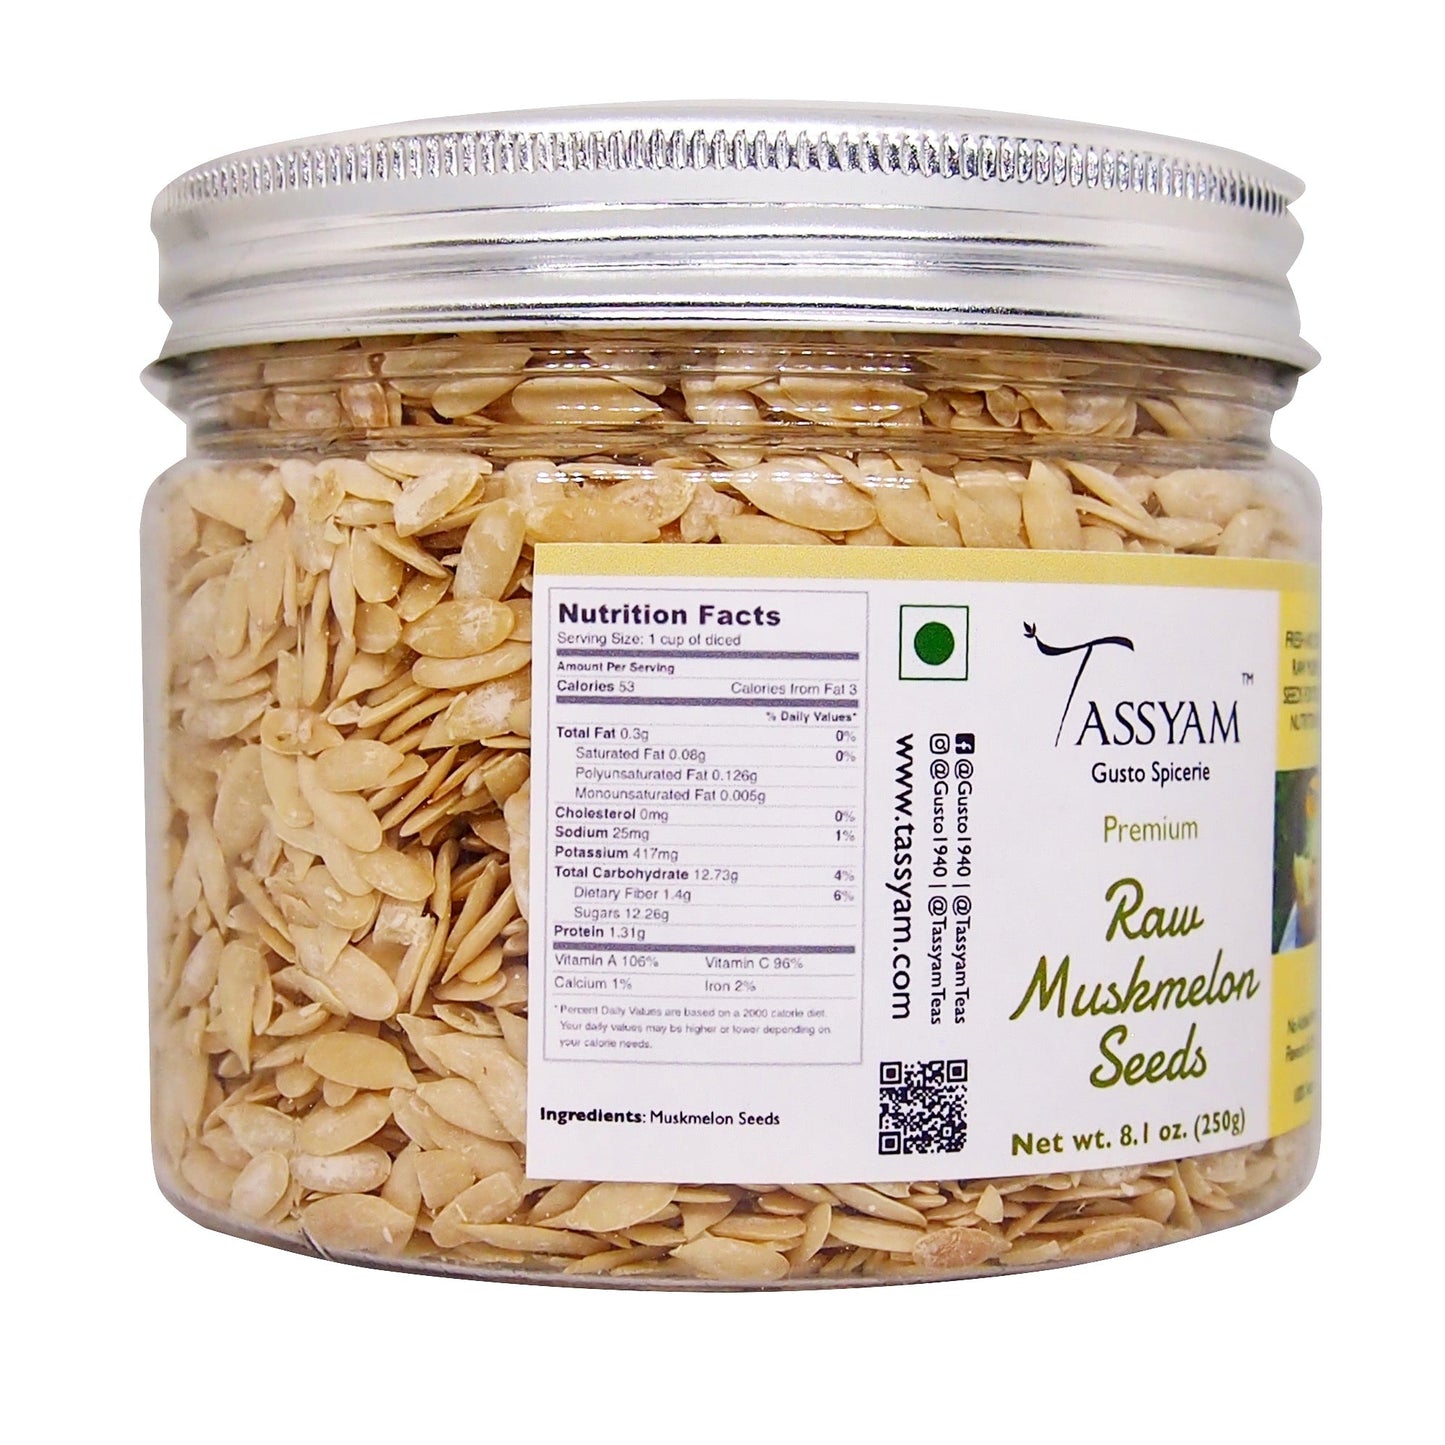 Raw Muskmelon Seeds 250g Jar - Tassyam Organics